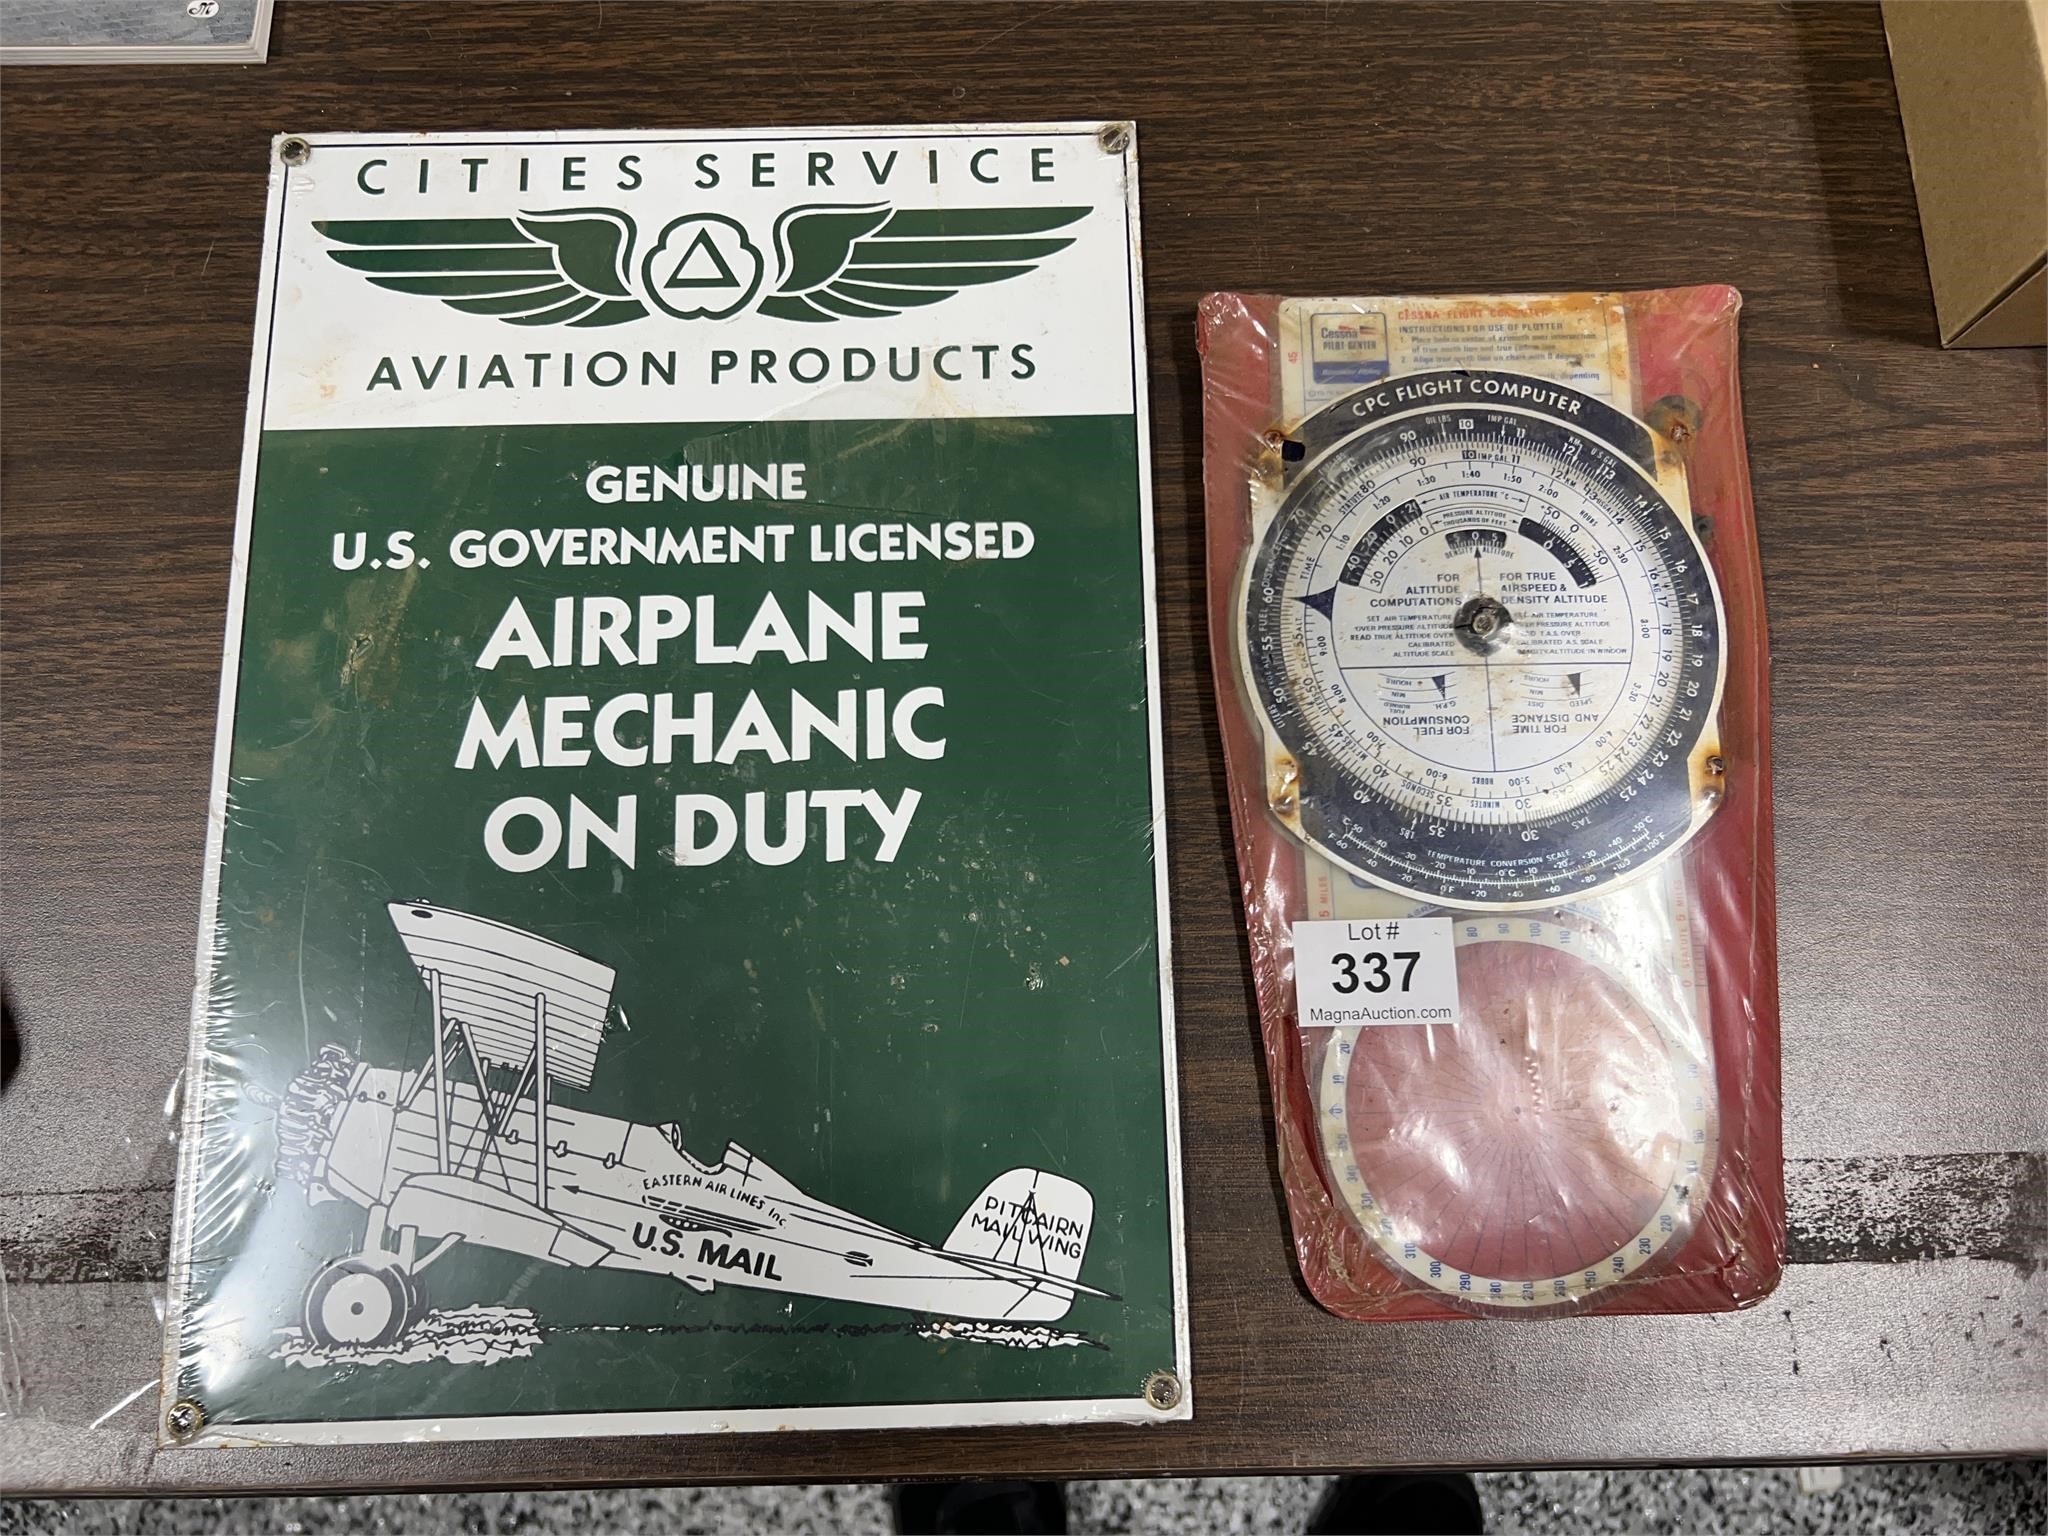 Airline Mechanic Sign & Cessna CPC Flight Computer